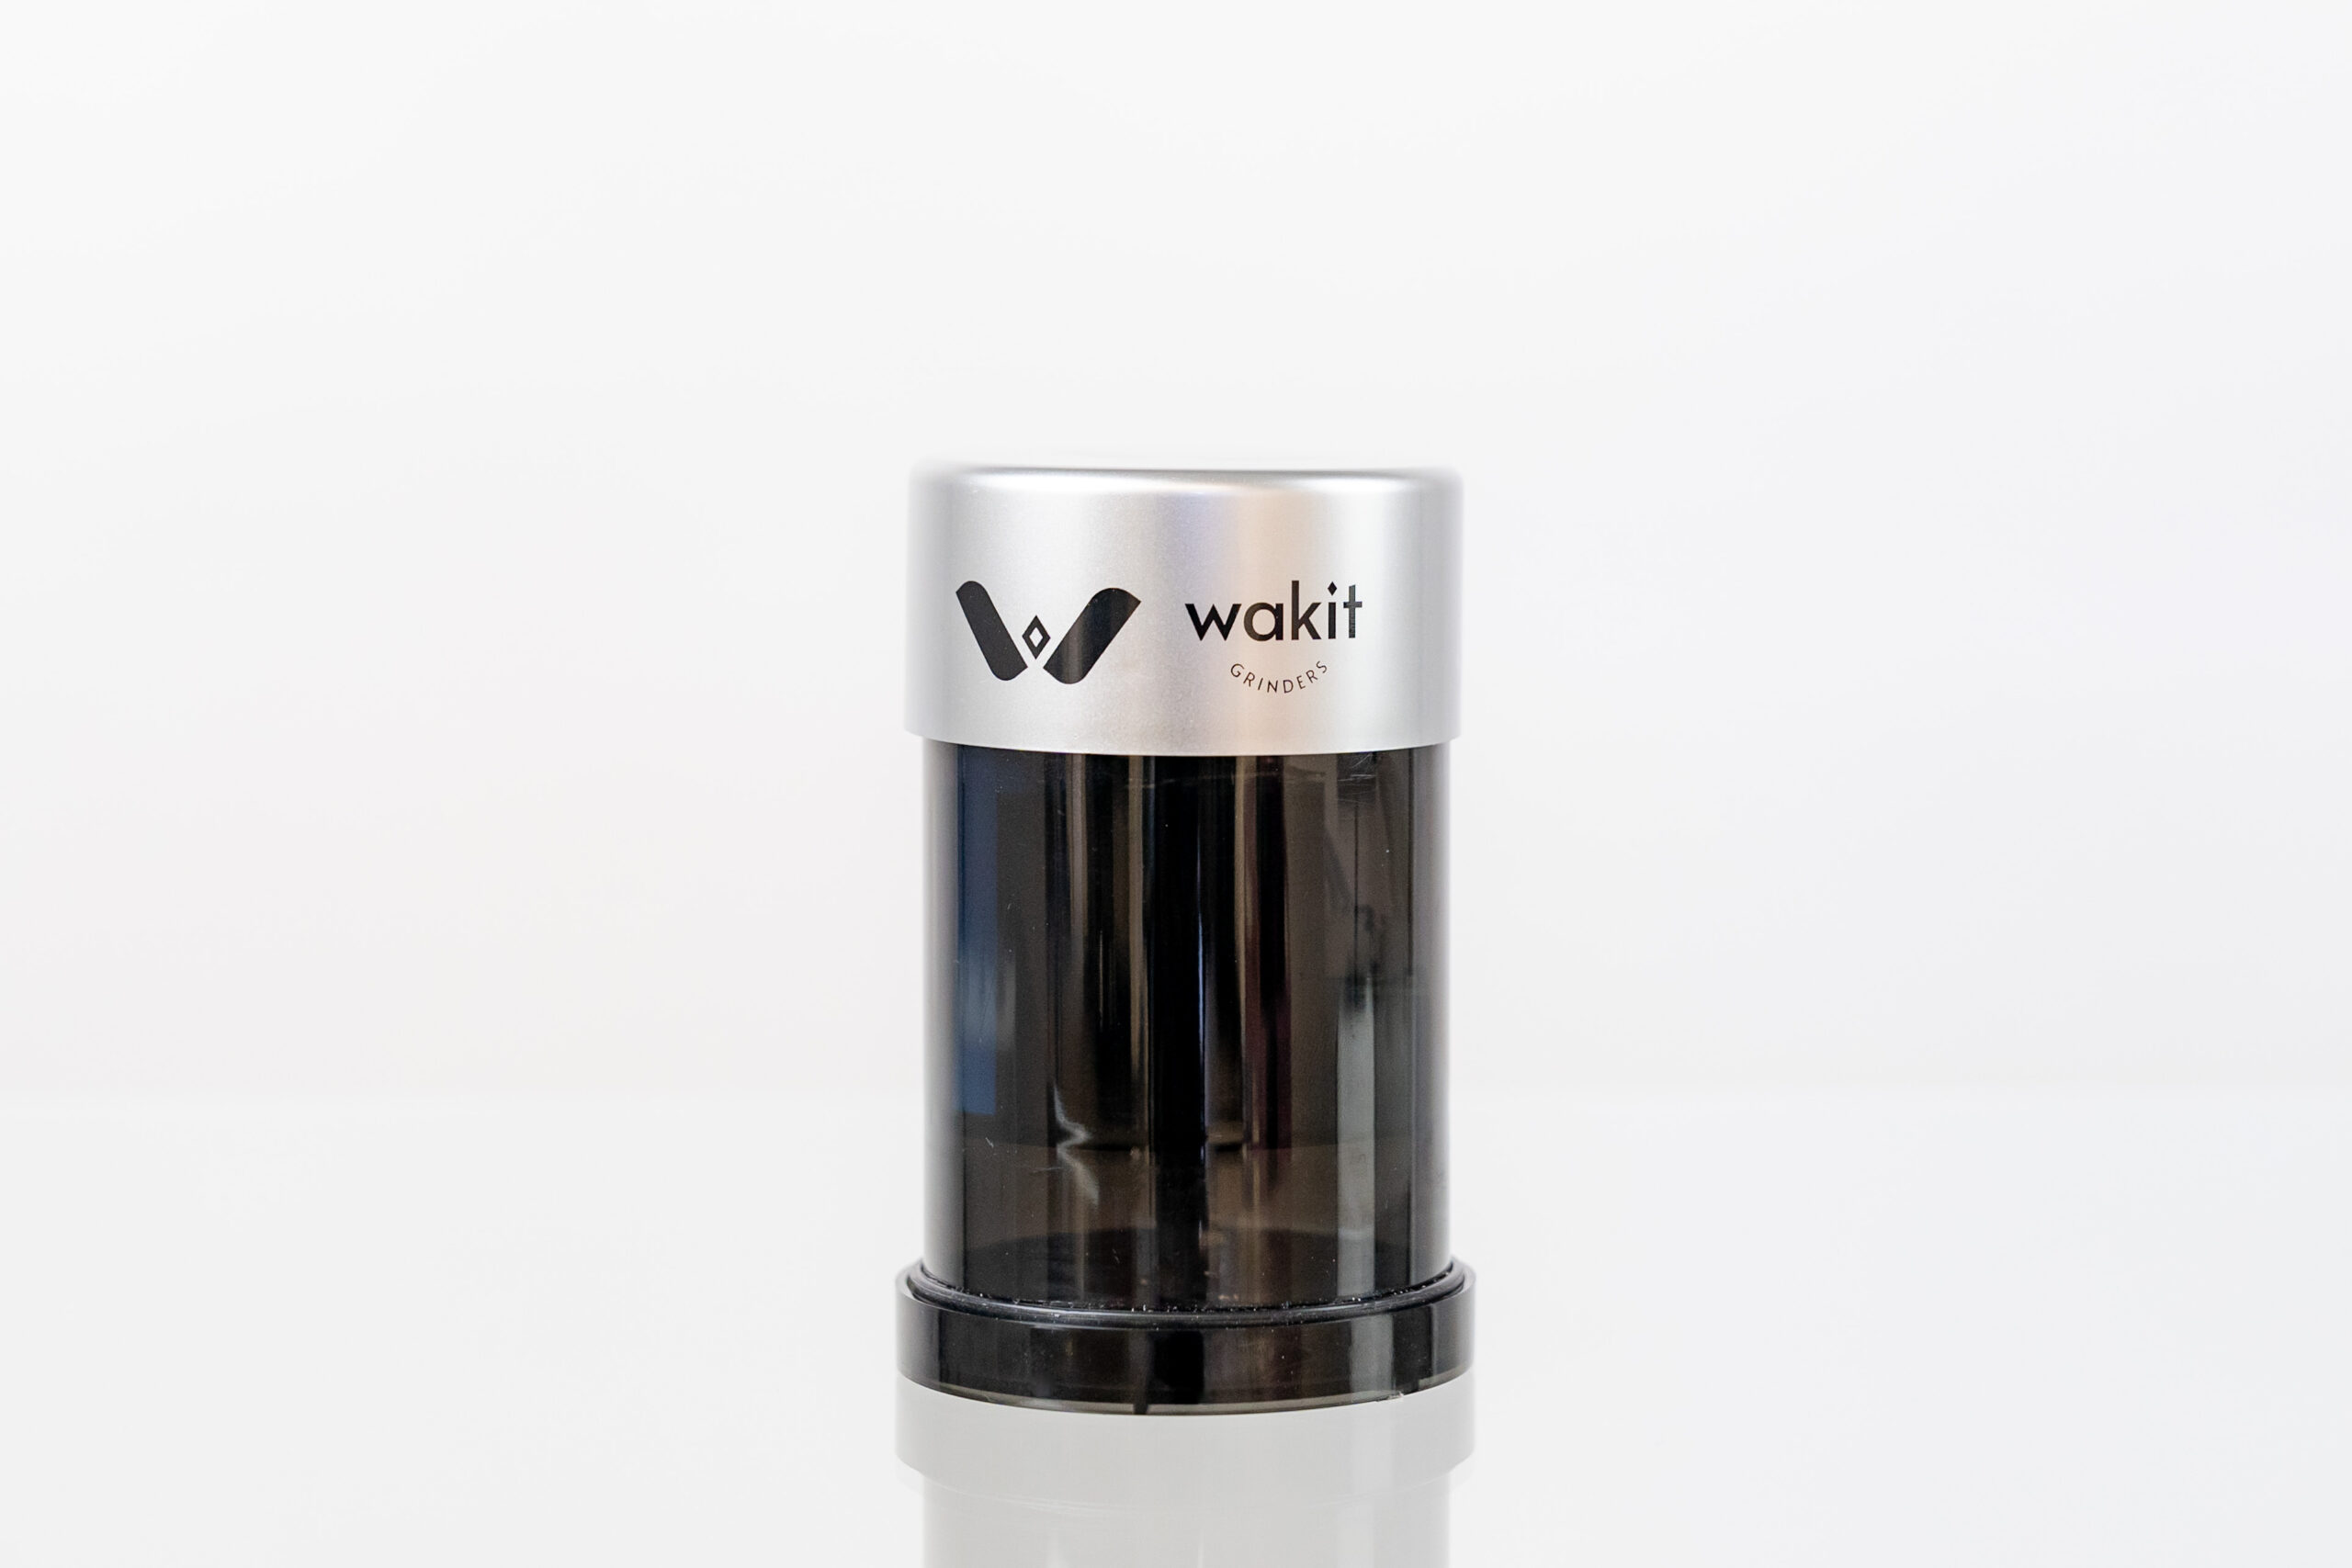 Coffee grinder POLVE, electric USB – Gourmet Kitchenworks